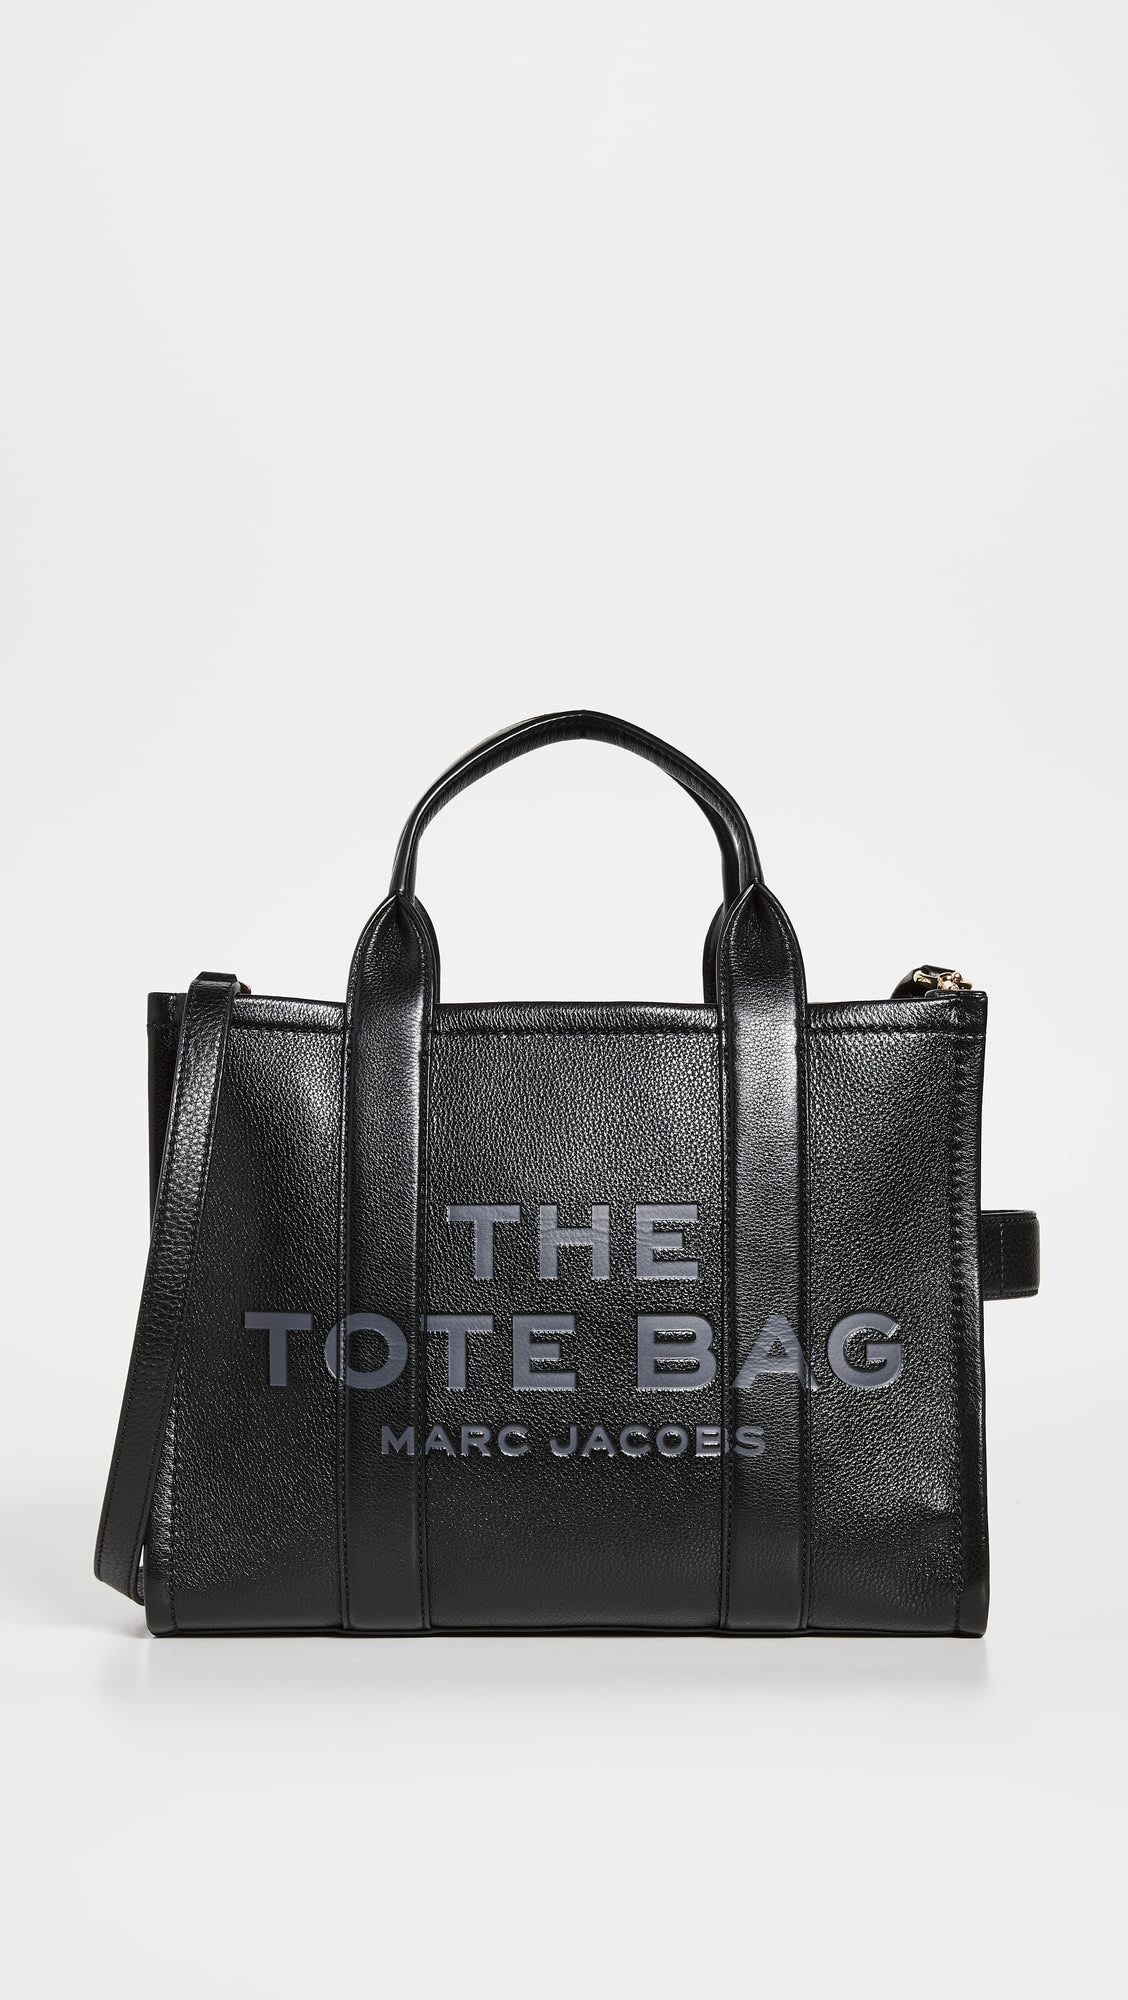  Marc Jacobs Women's Tote Bag, Black : Clothing, Shoes